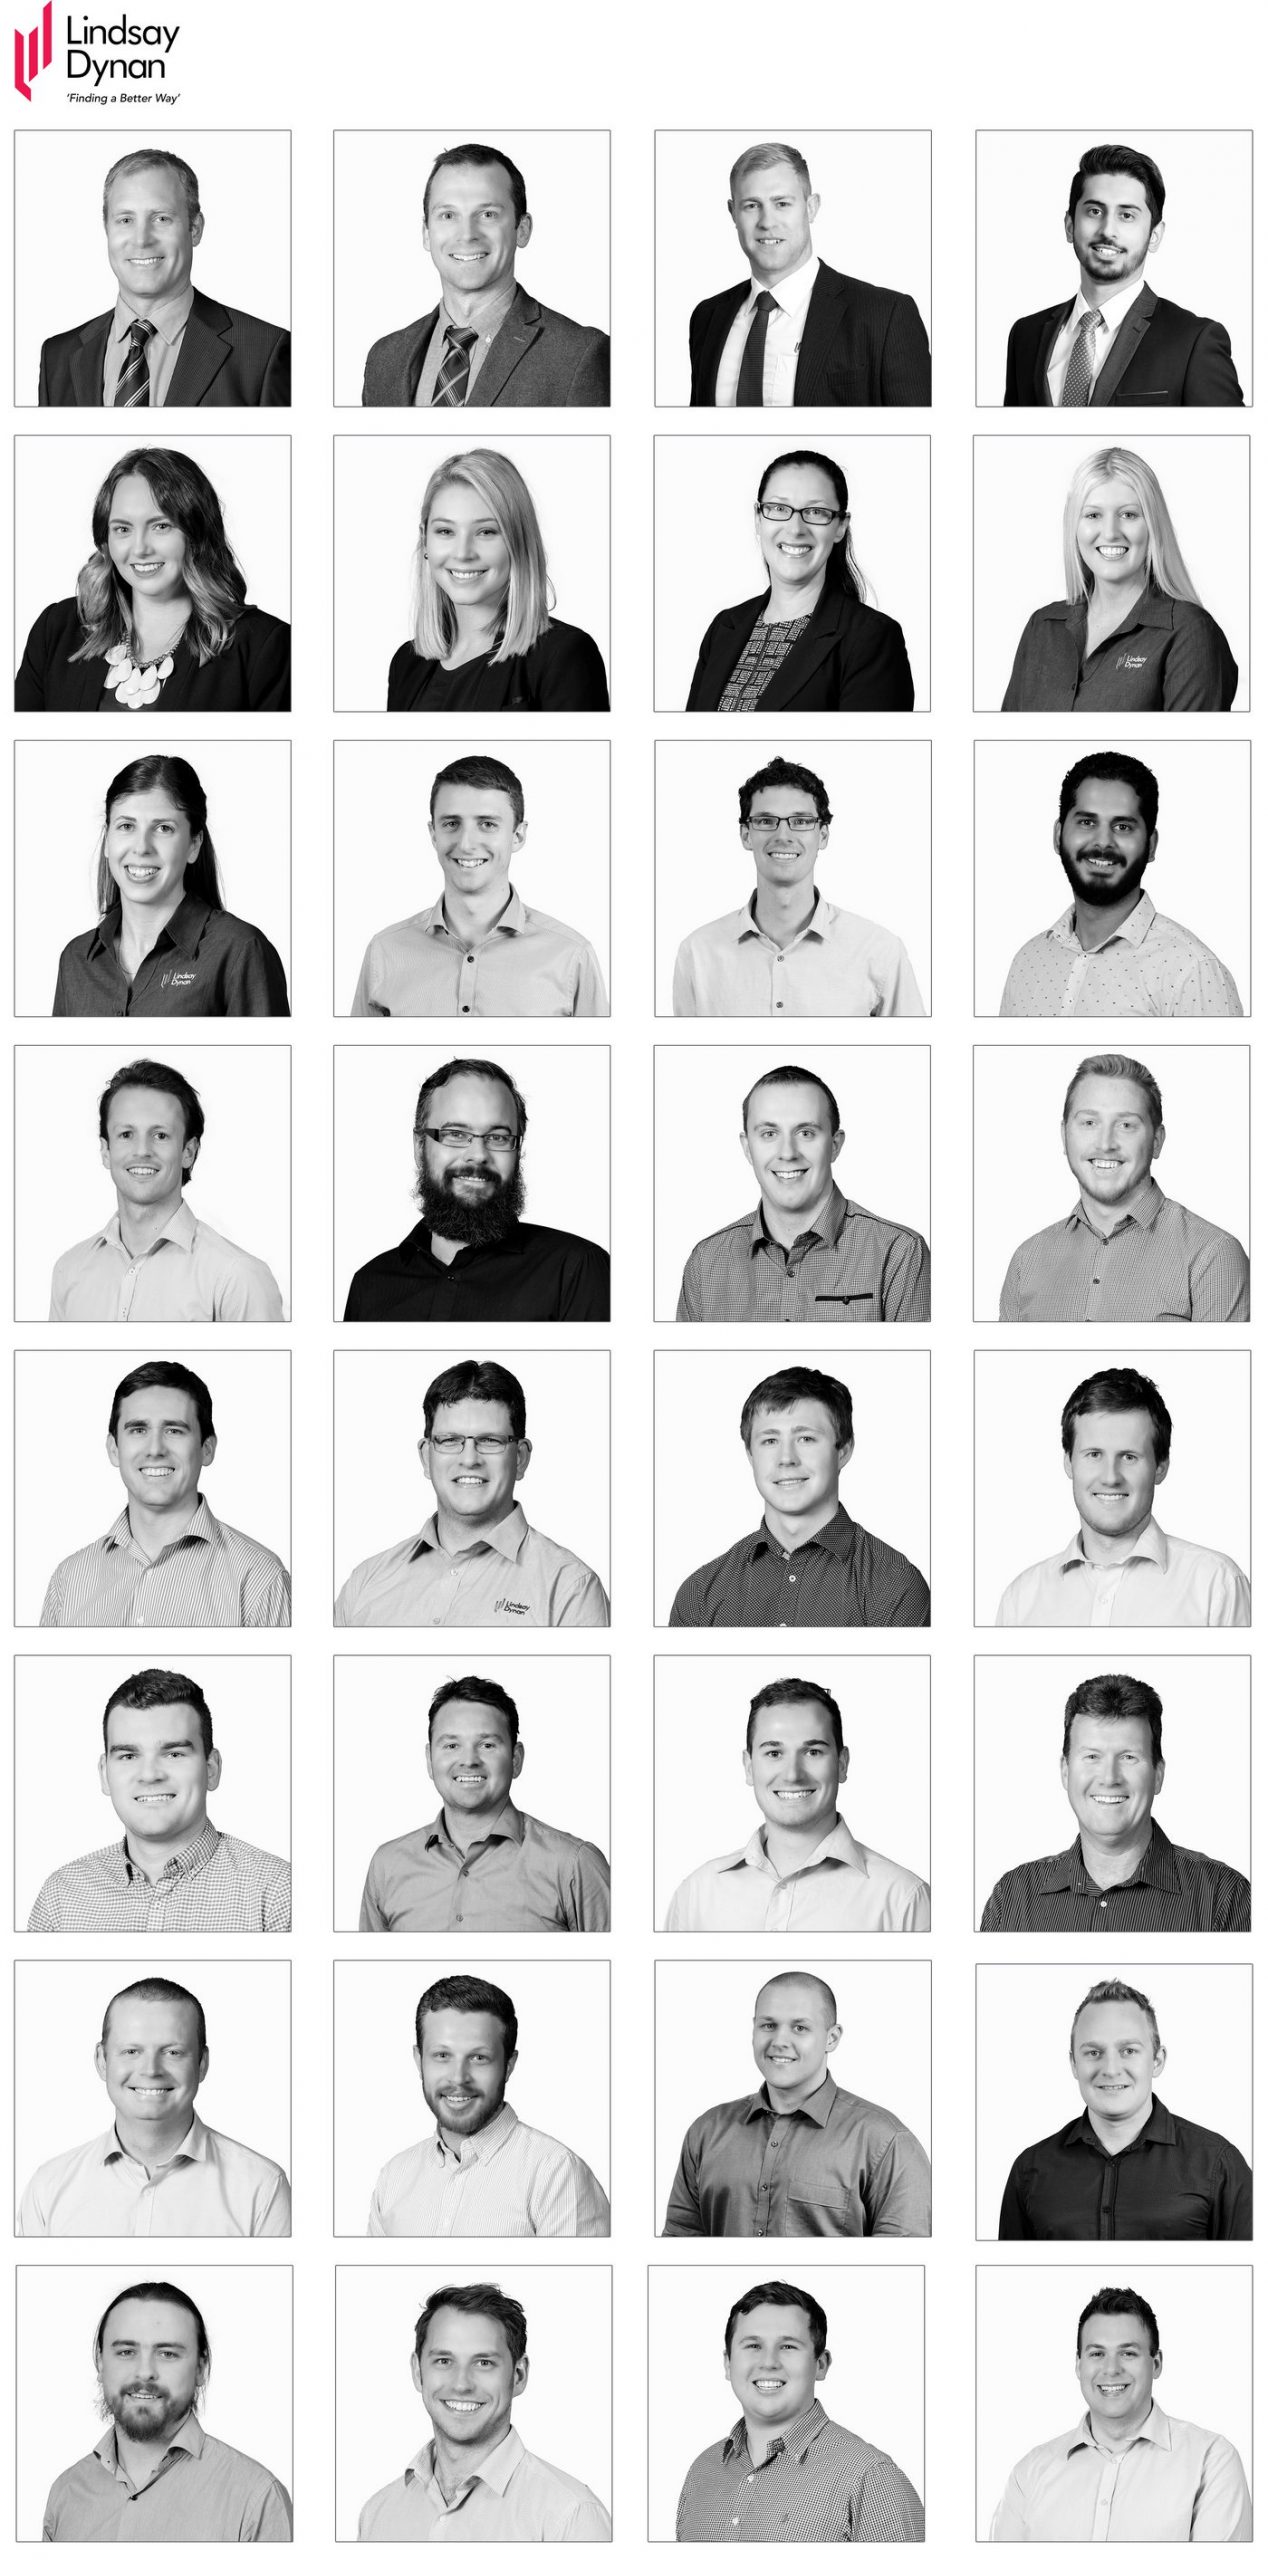 Team headshot profile portrait Lindsay Dynan Consulting Engineers - Newcastle, Gosford, Sydney